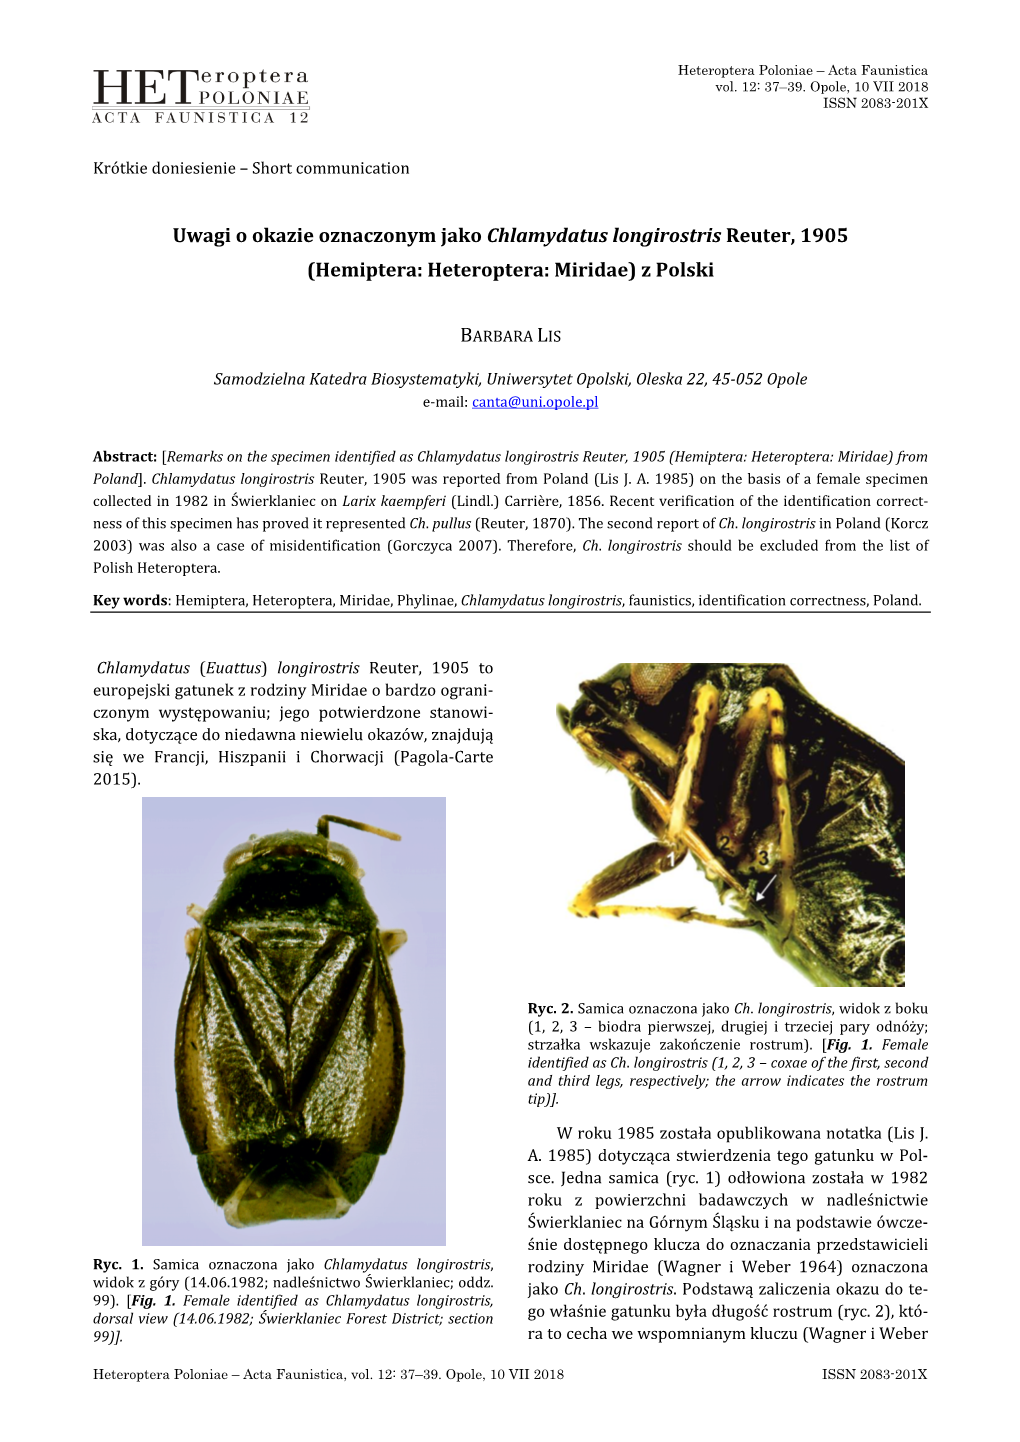 Uwagi O Okazie Oznaczonym Jako Chlamydatus Longirostris Reuter, 1905 (Hemiptera: Heteroptera: Miridae) Z Polski